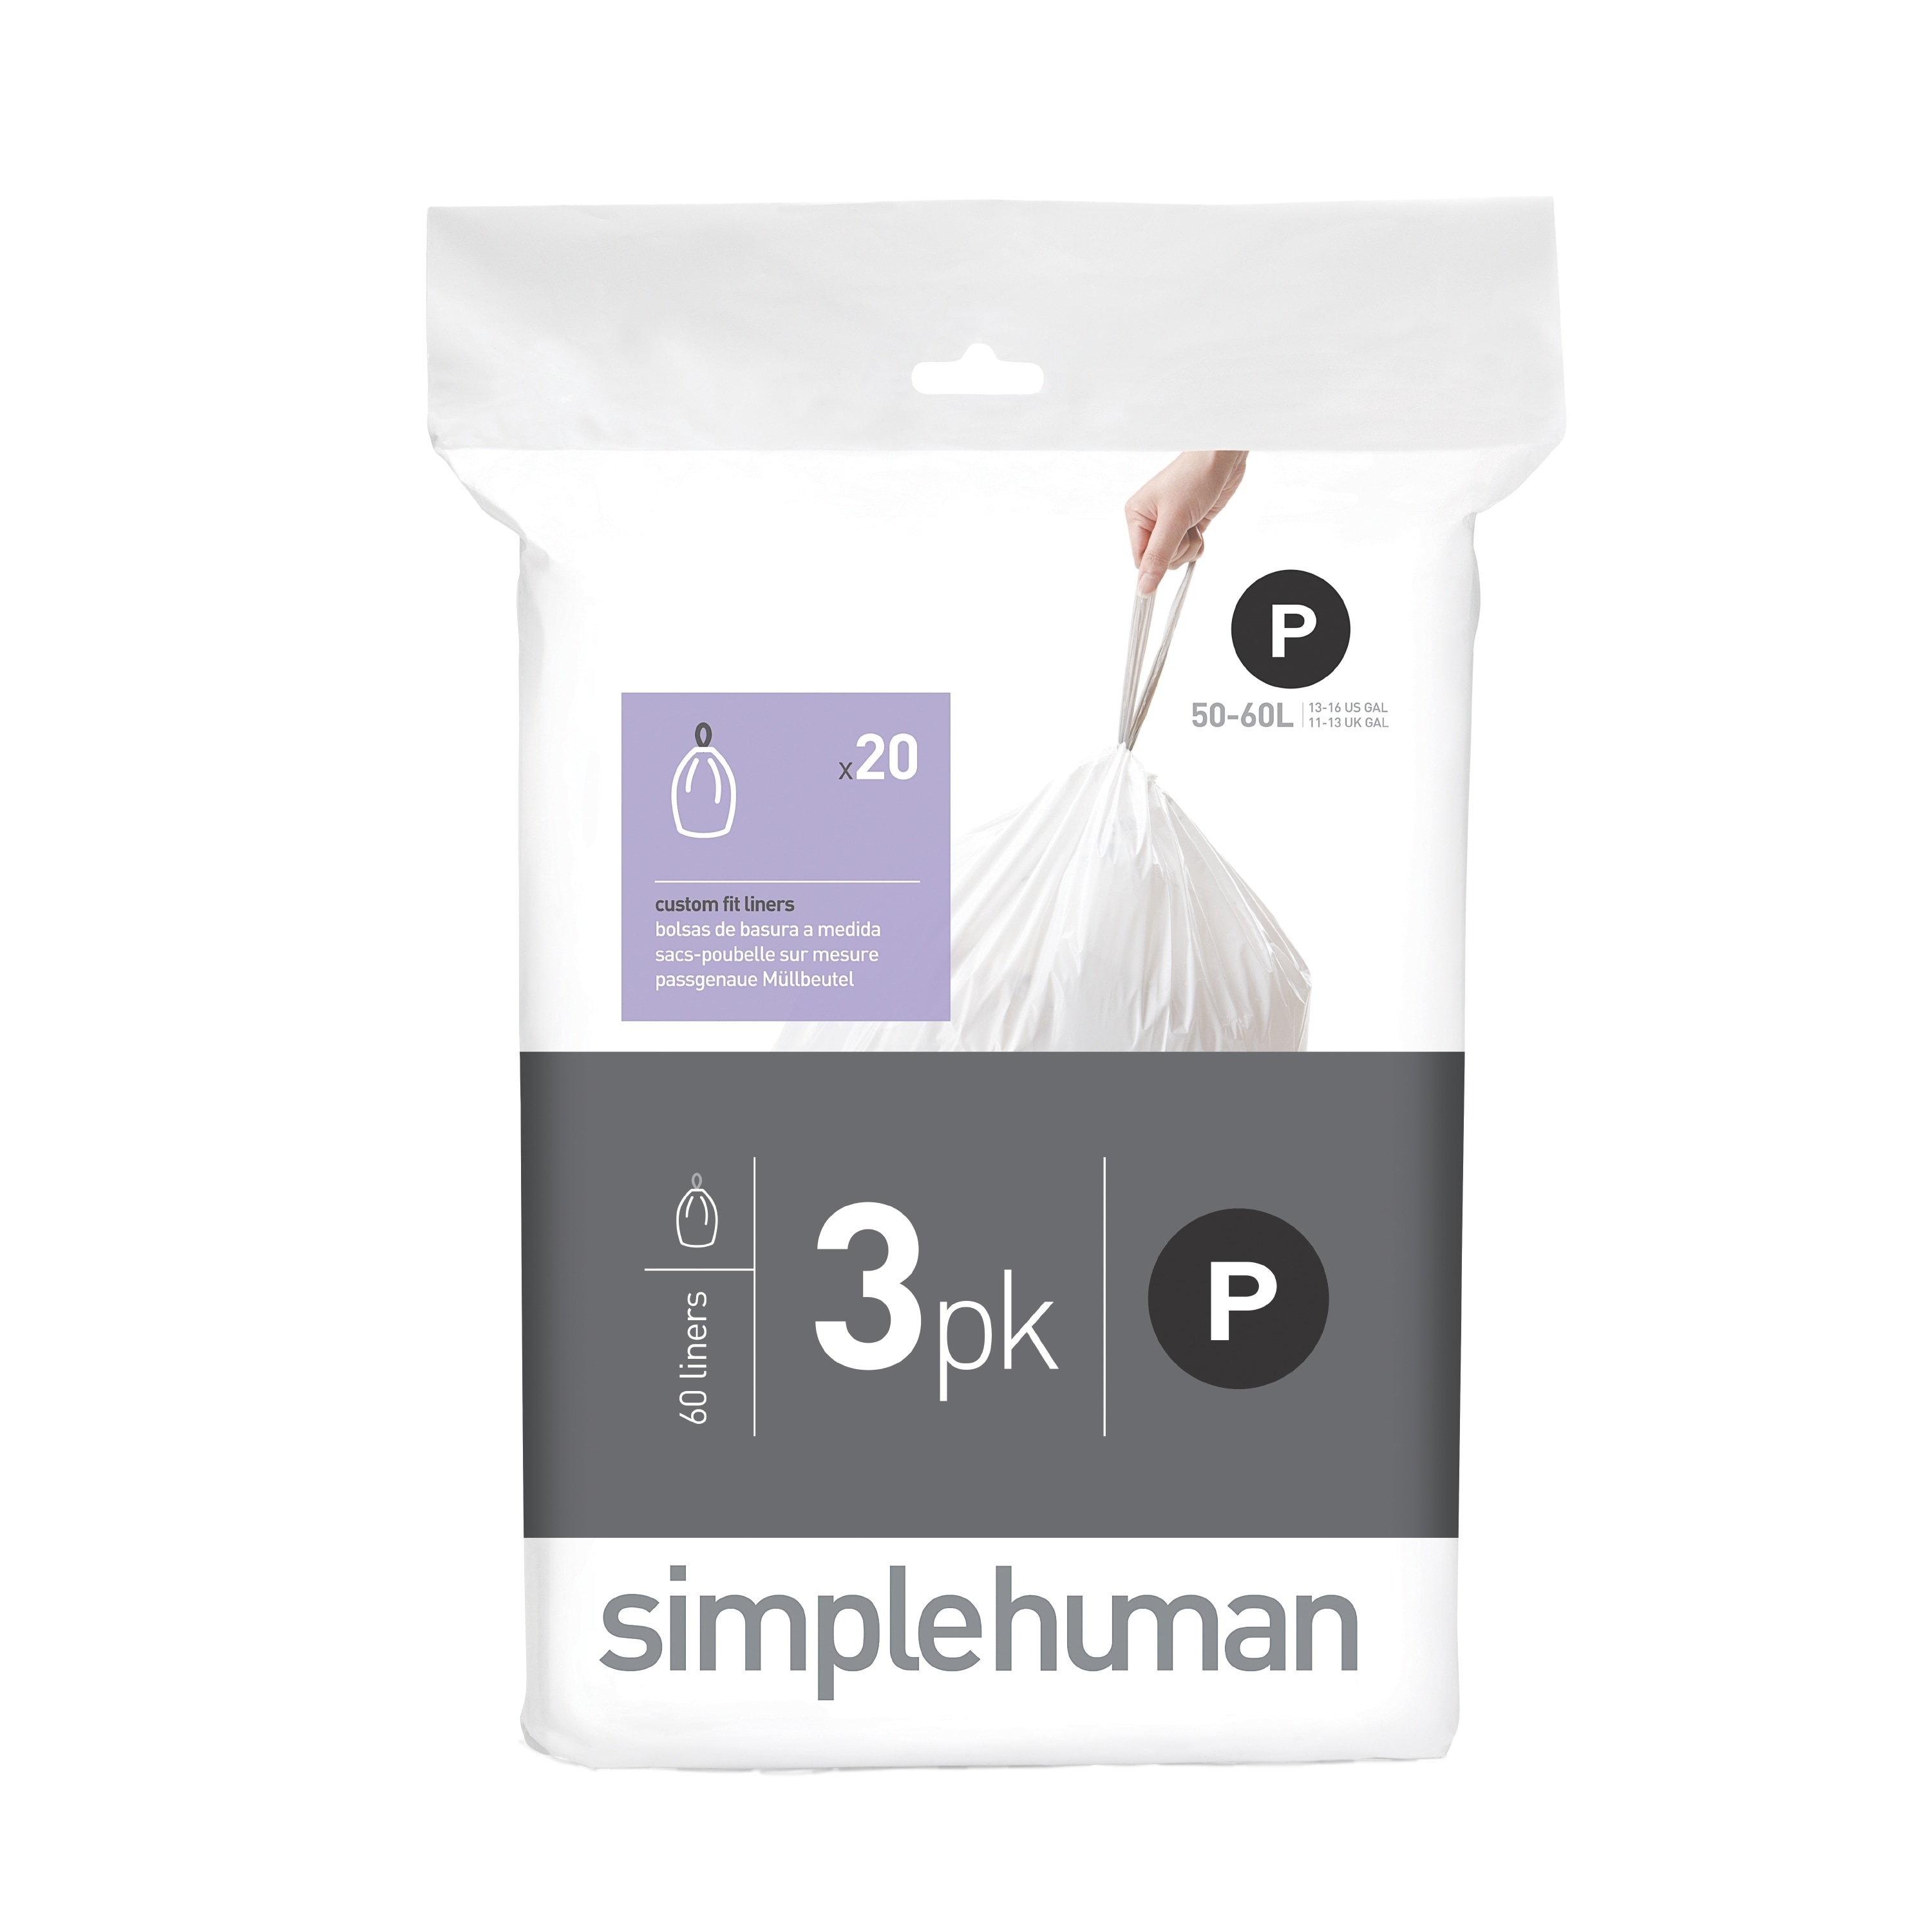 Simplehuman Code R Bin Liners, Pack of 60, Custom Fit